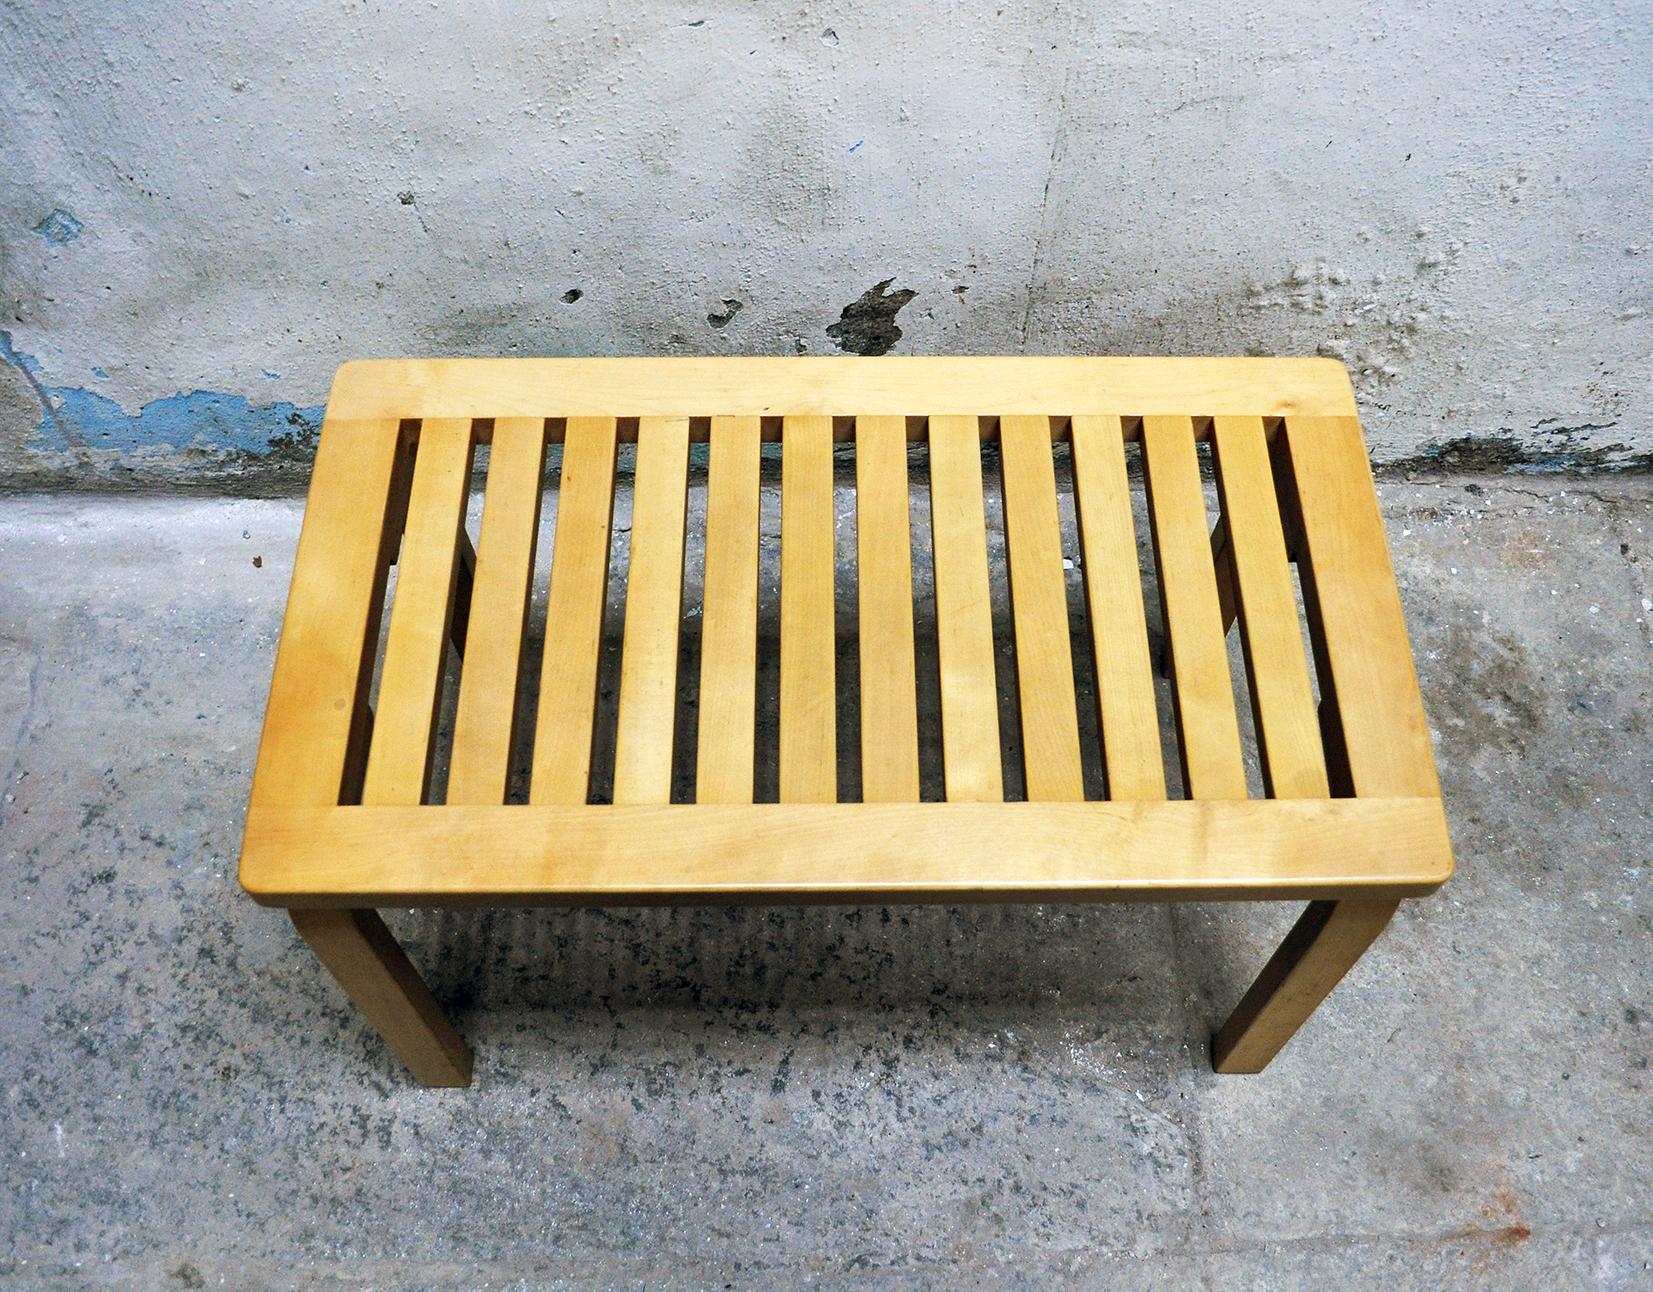 Birch bench.
Model 153B
Designer Alvar Aalto
Manufacturer Artek
1960s.